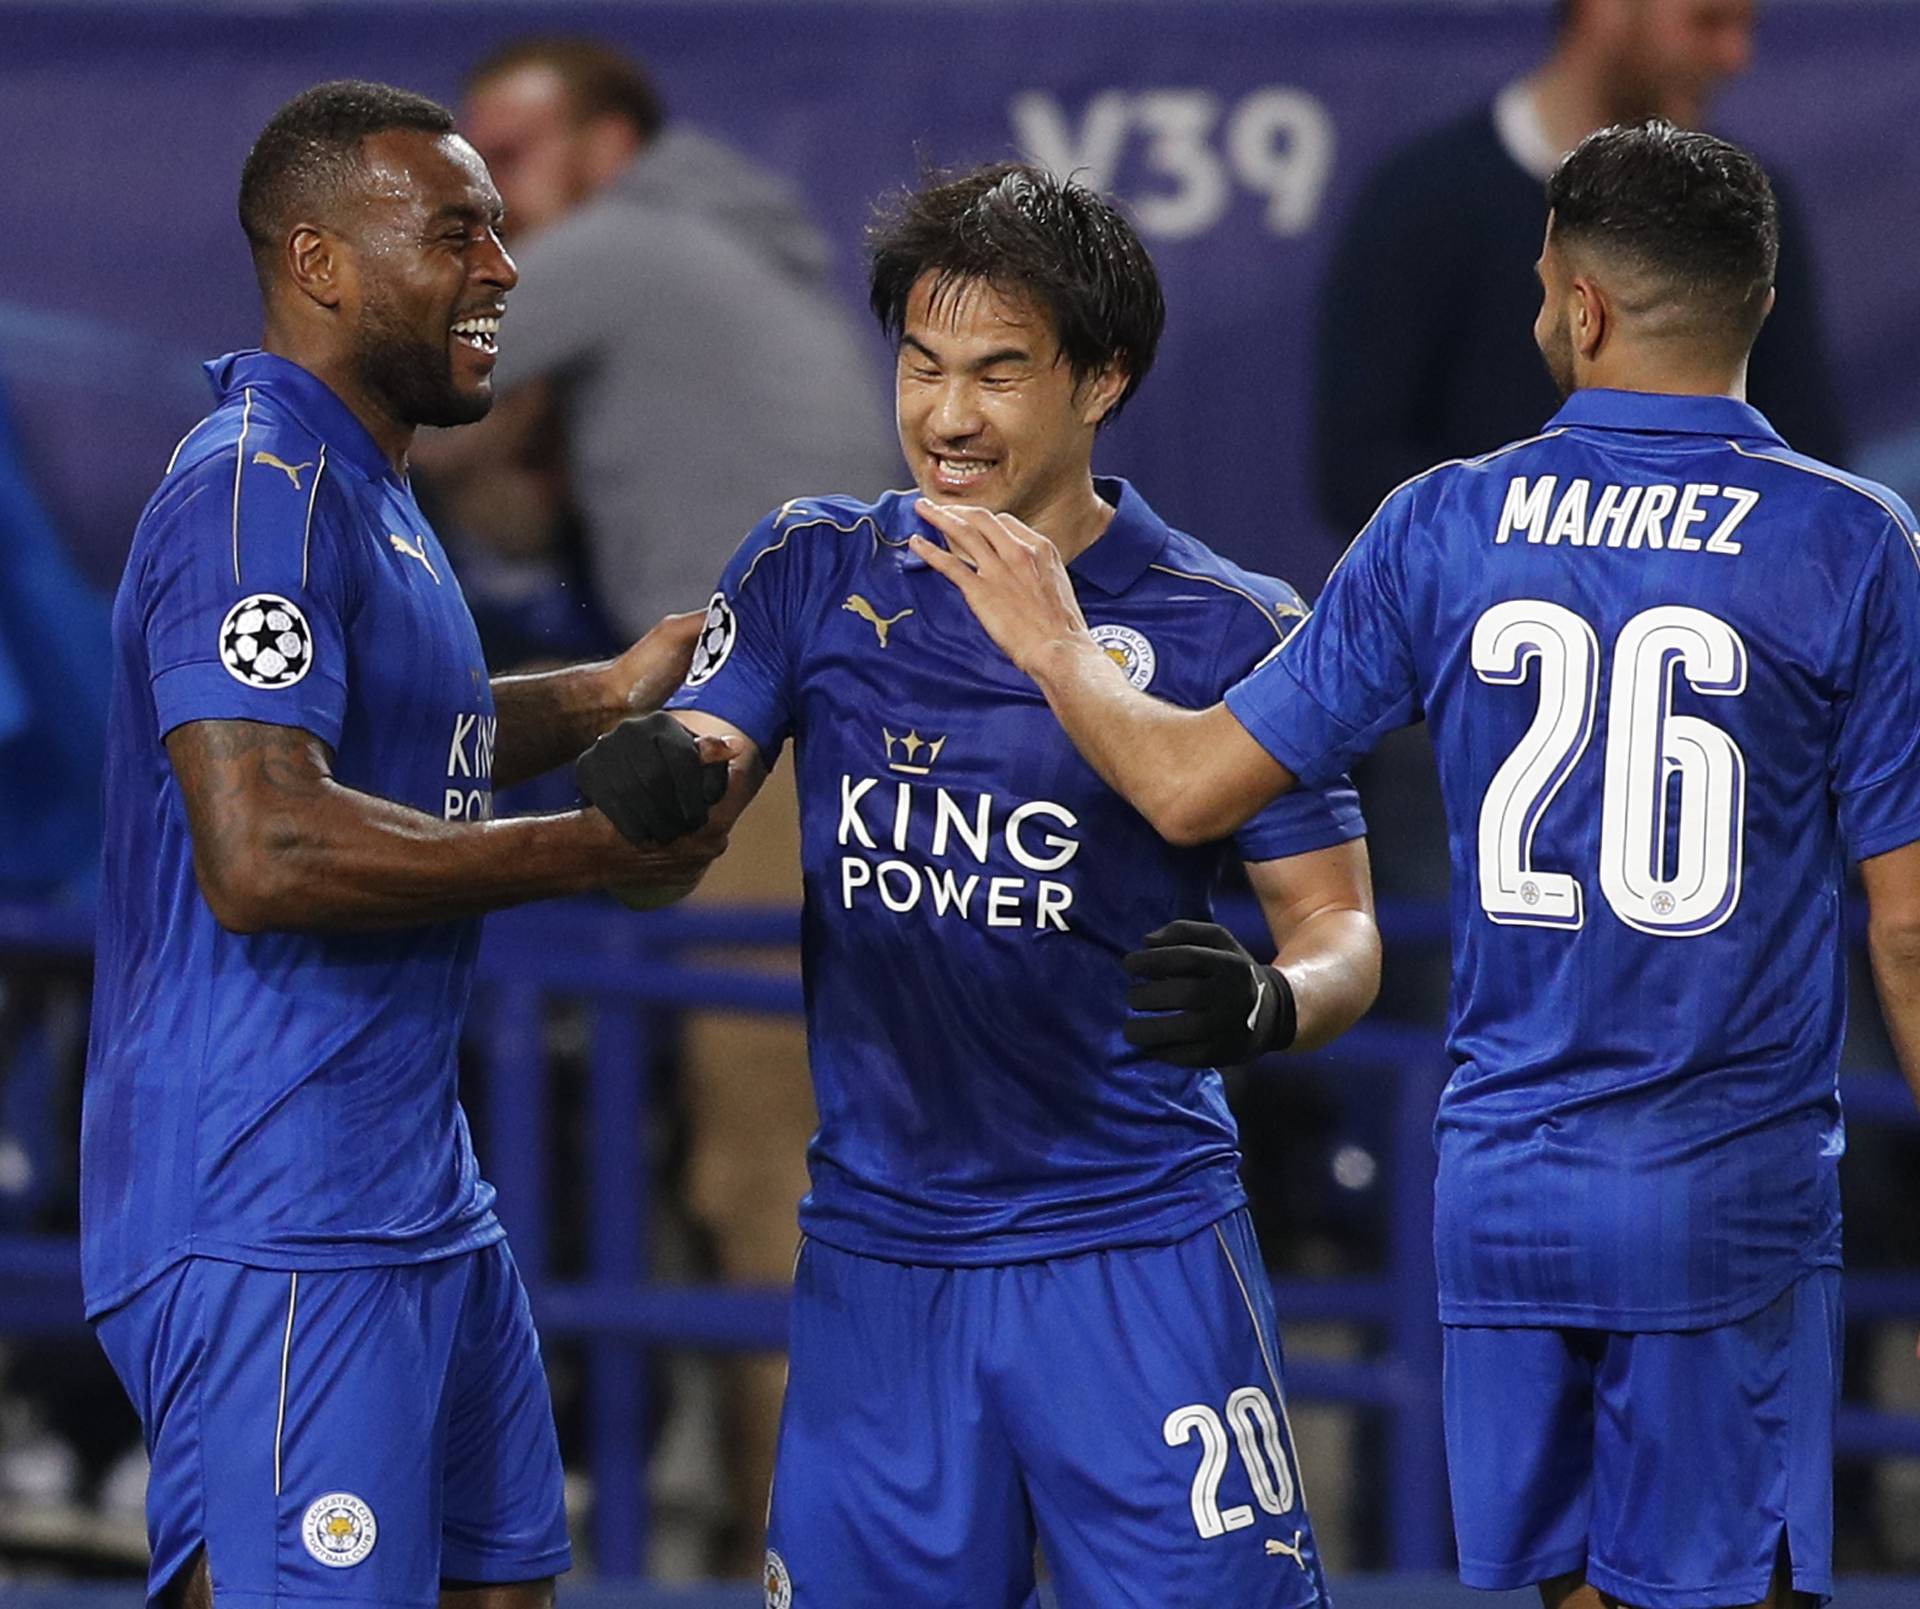 Leicester City's Wes Morgan celebrates with Shinji Okazaki and Riyad Mahrez after scoring their first goal